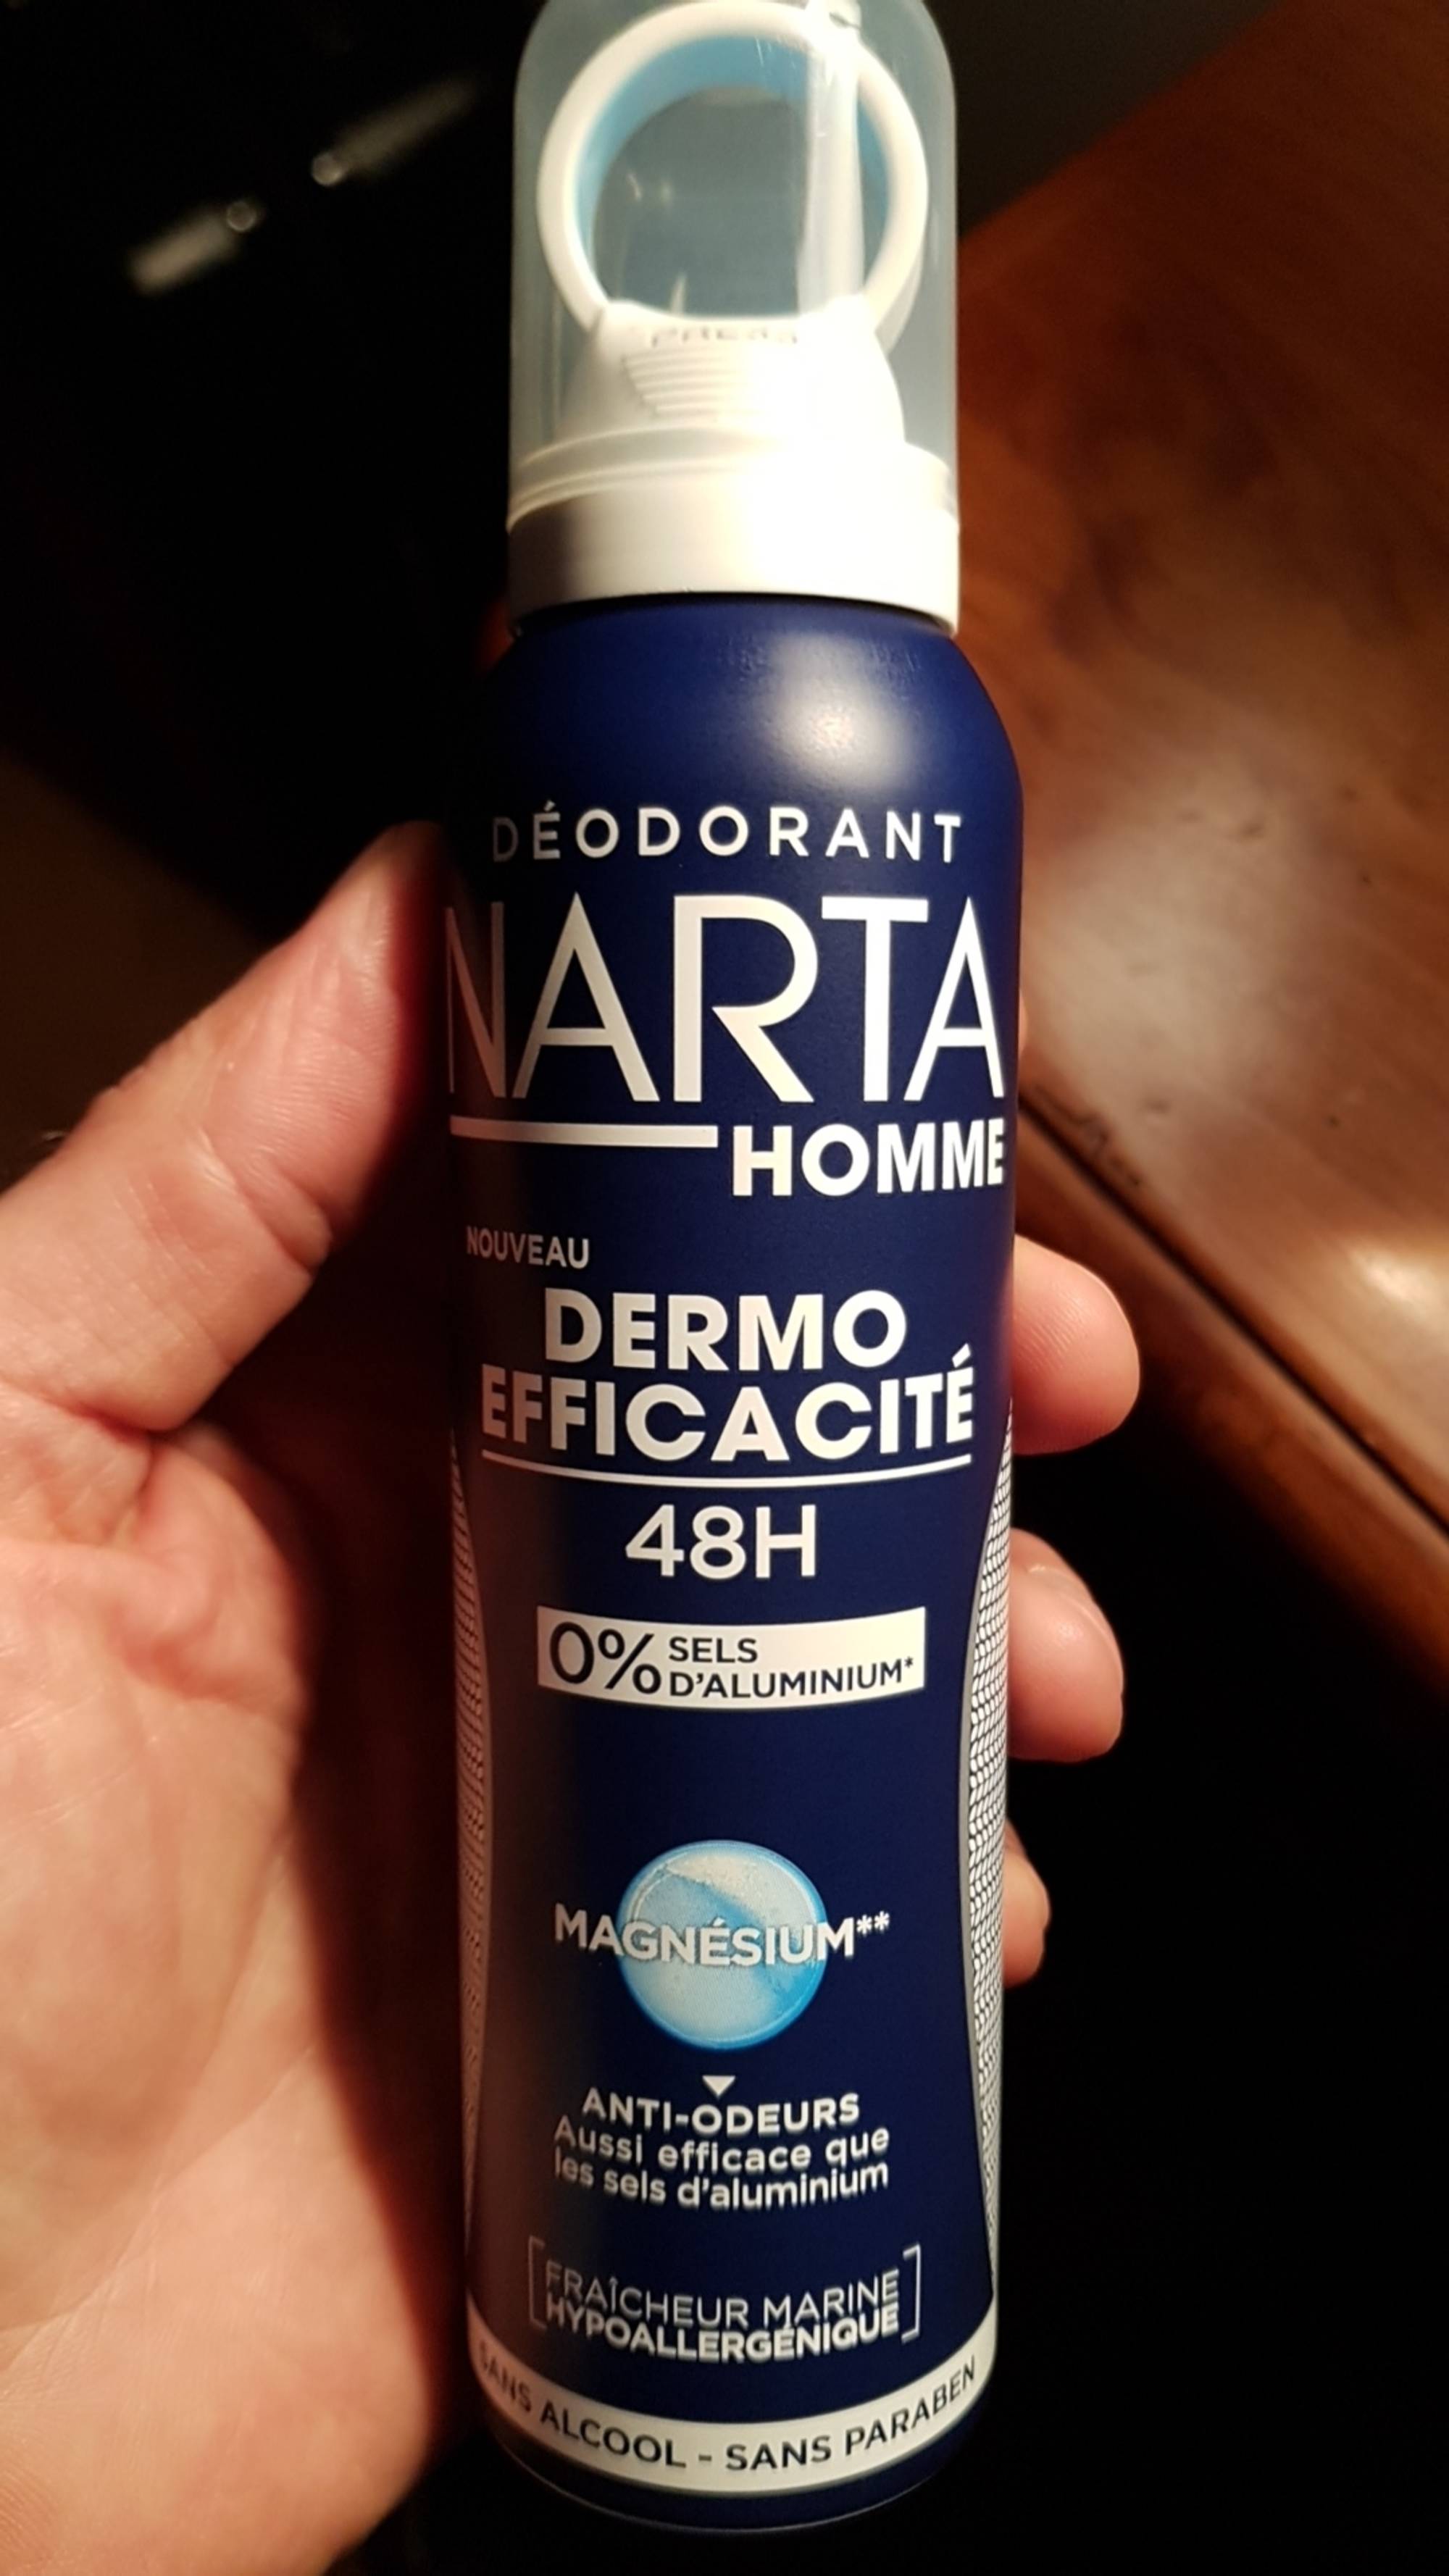 Déodorant bille, Anti-odeurs, Bio-efficacité, Narta